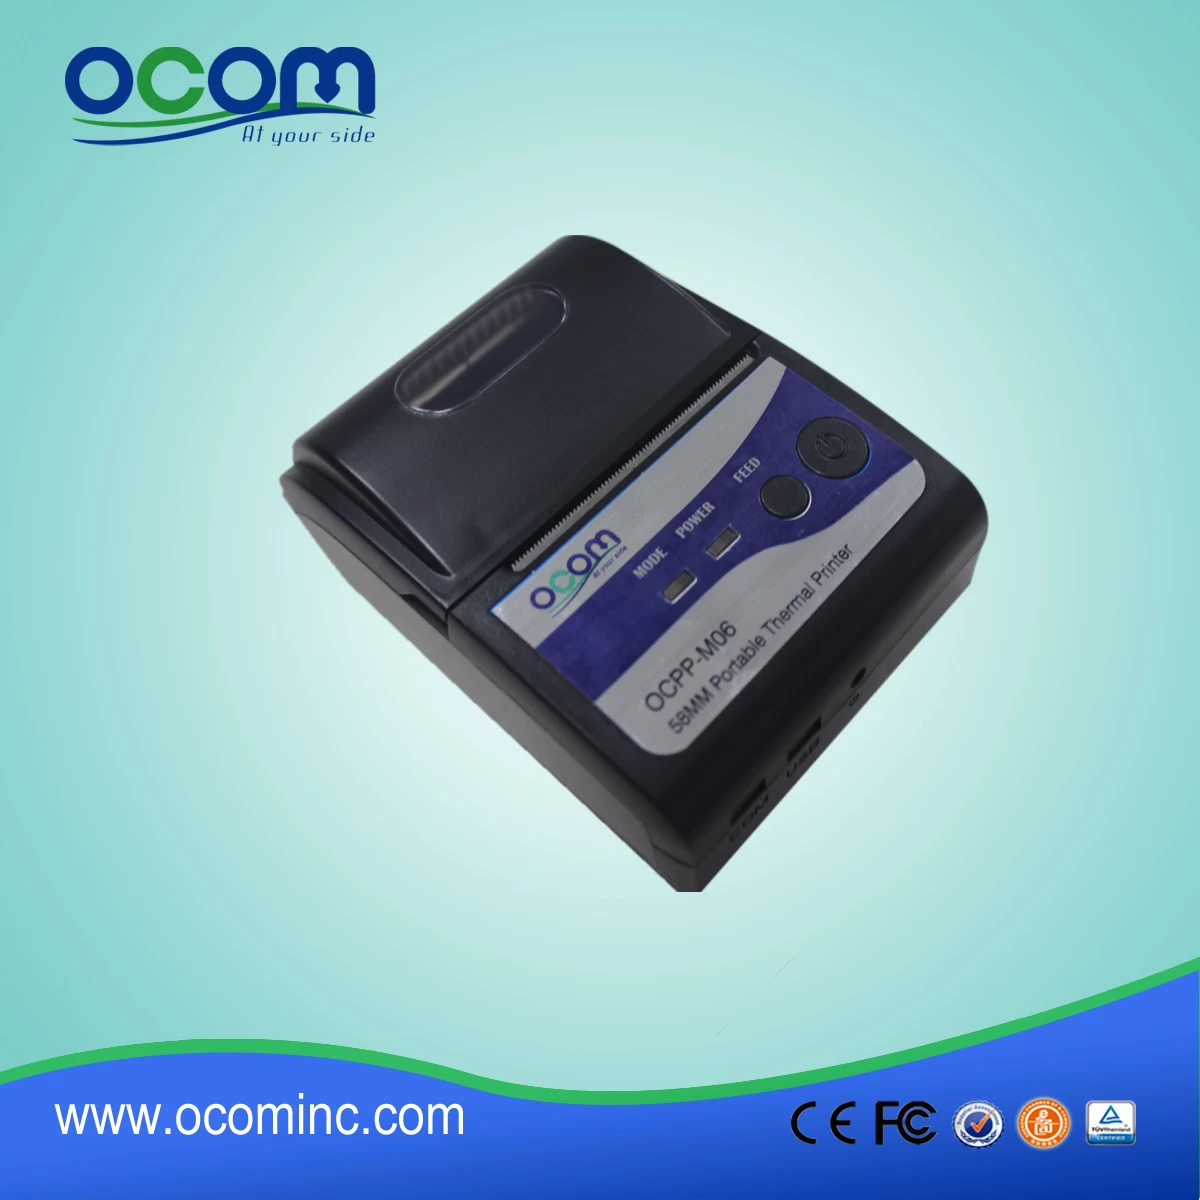 (OCPP-M06) OCOM 2015 Hot selling android portable bluetooth printer